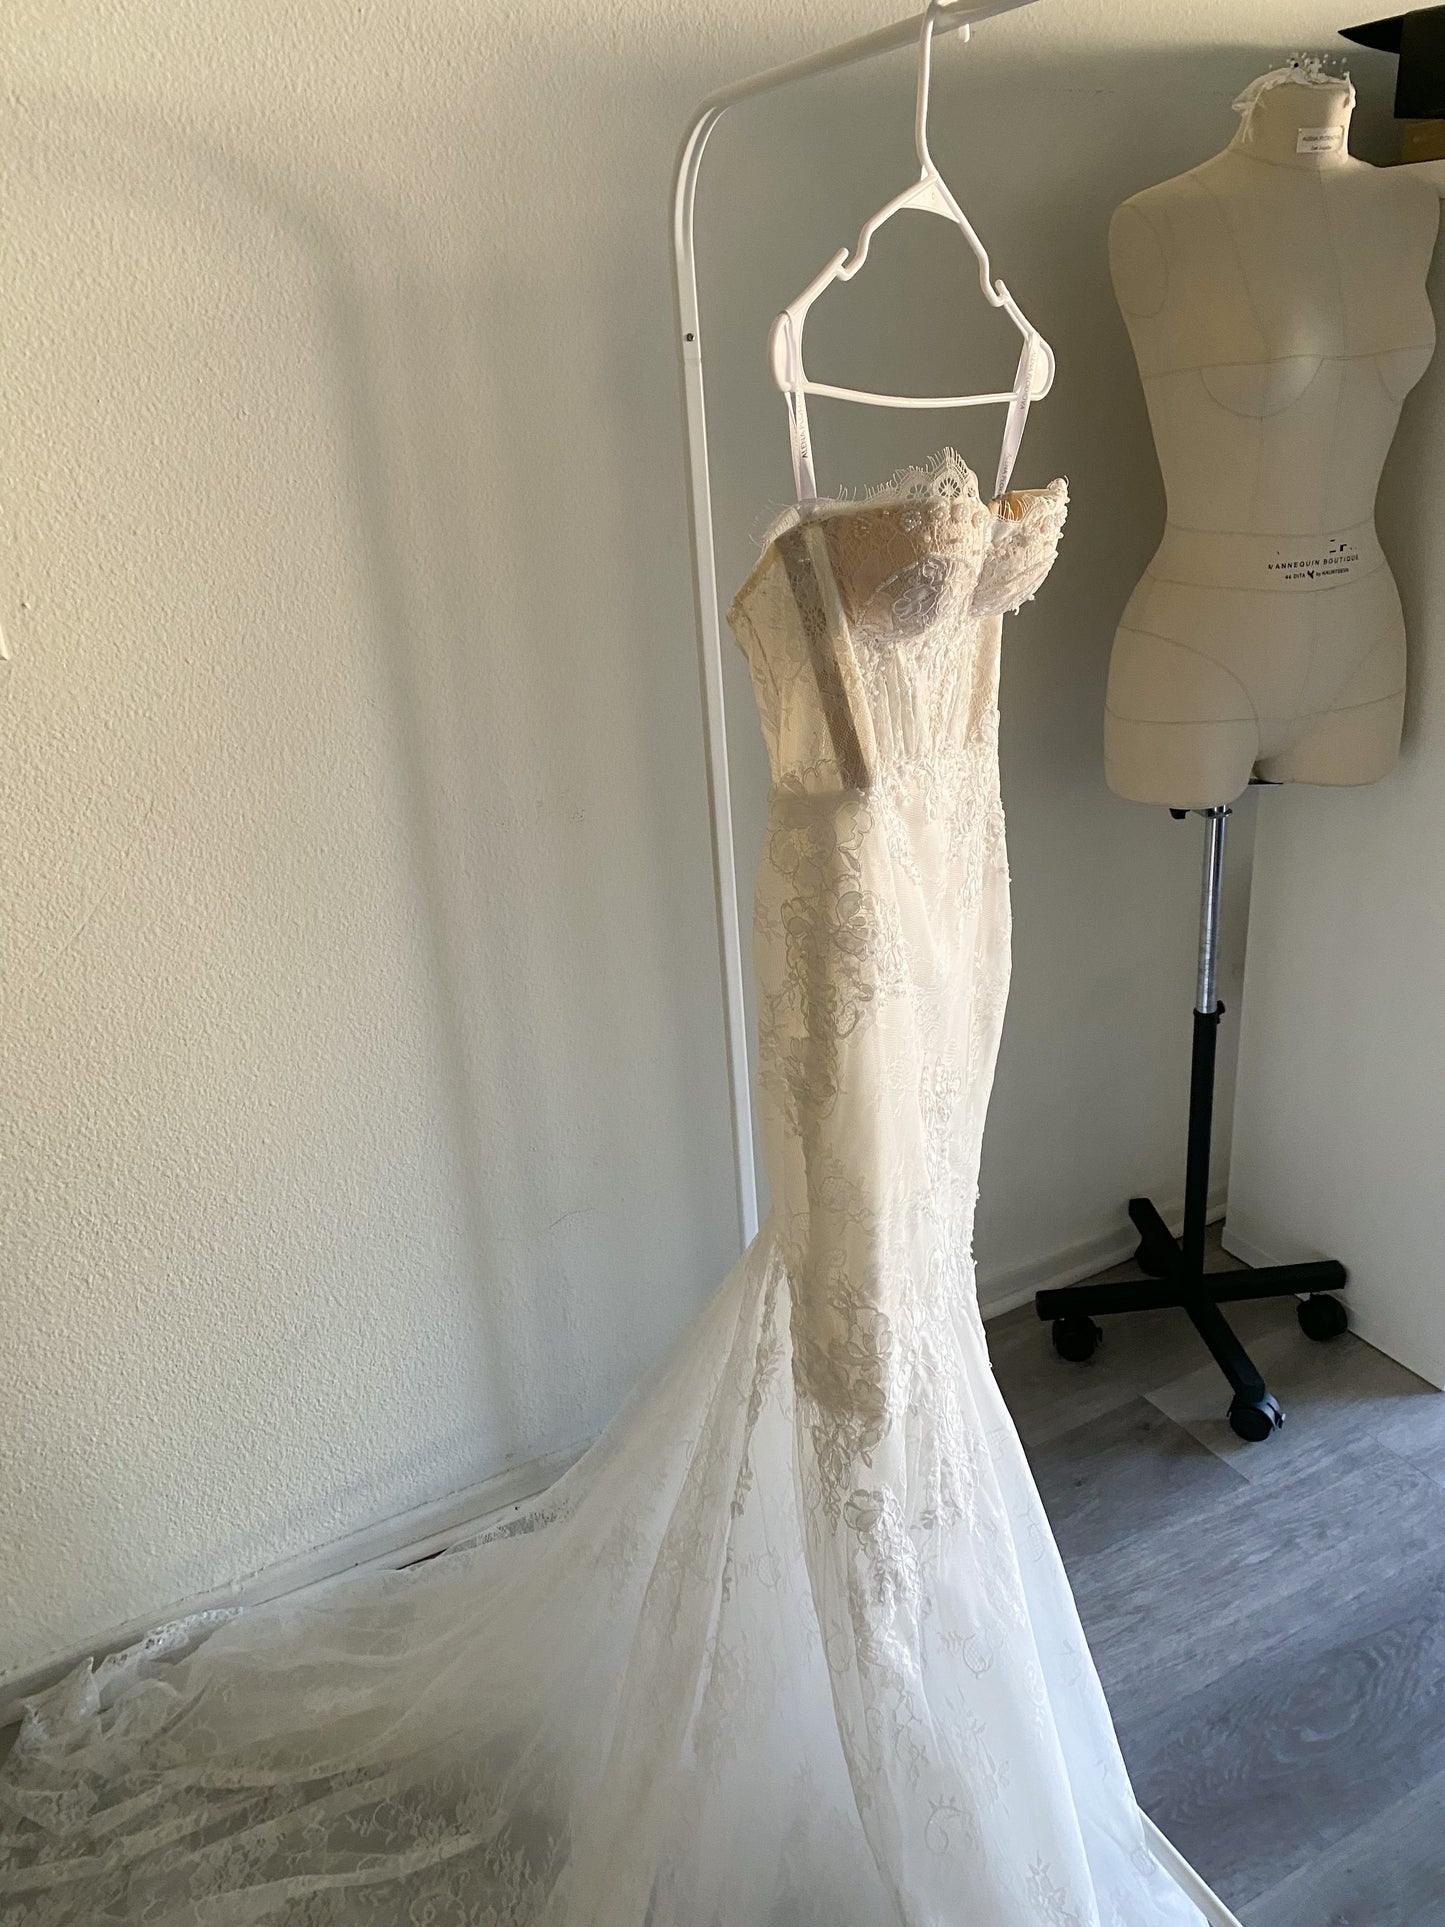 Anastasia/ Lace mermaid wedding dress with detachable sleeves.